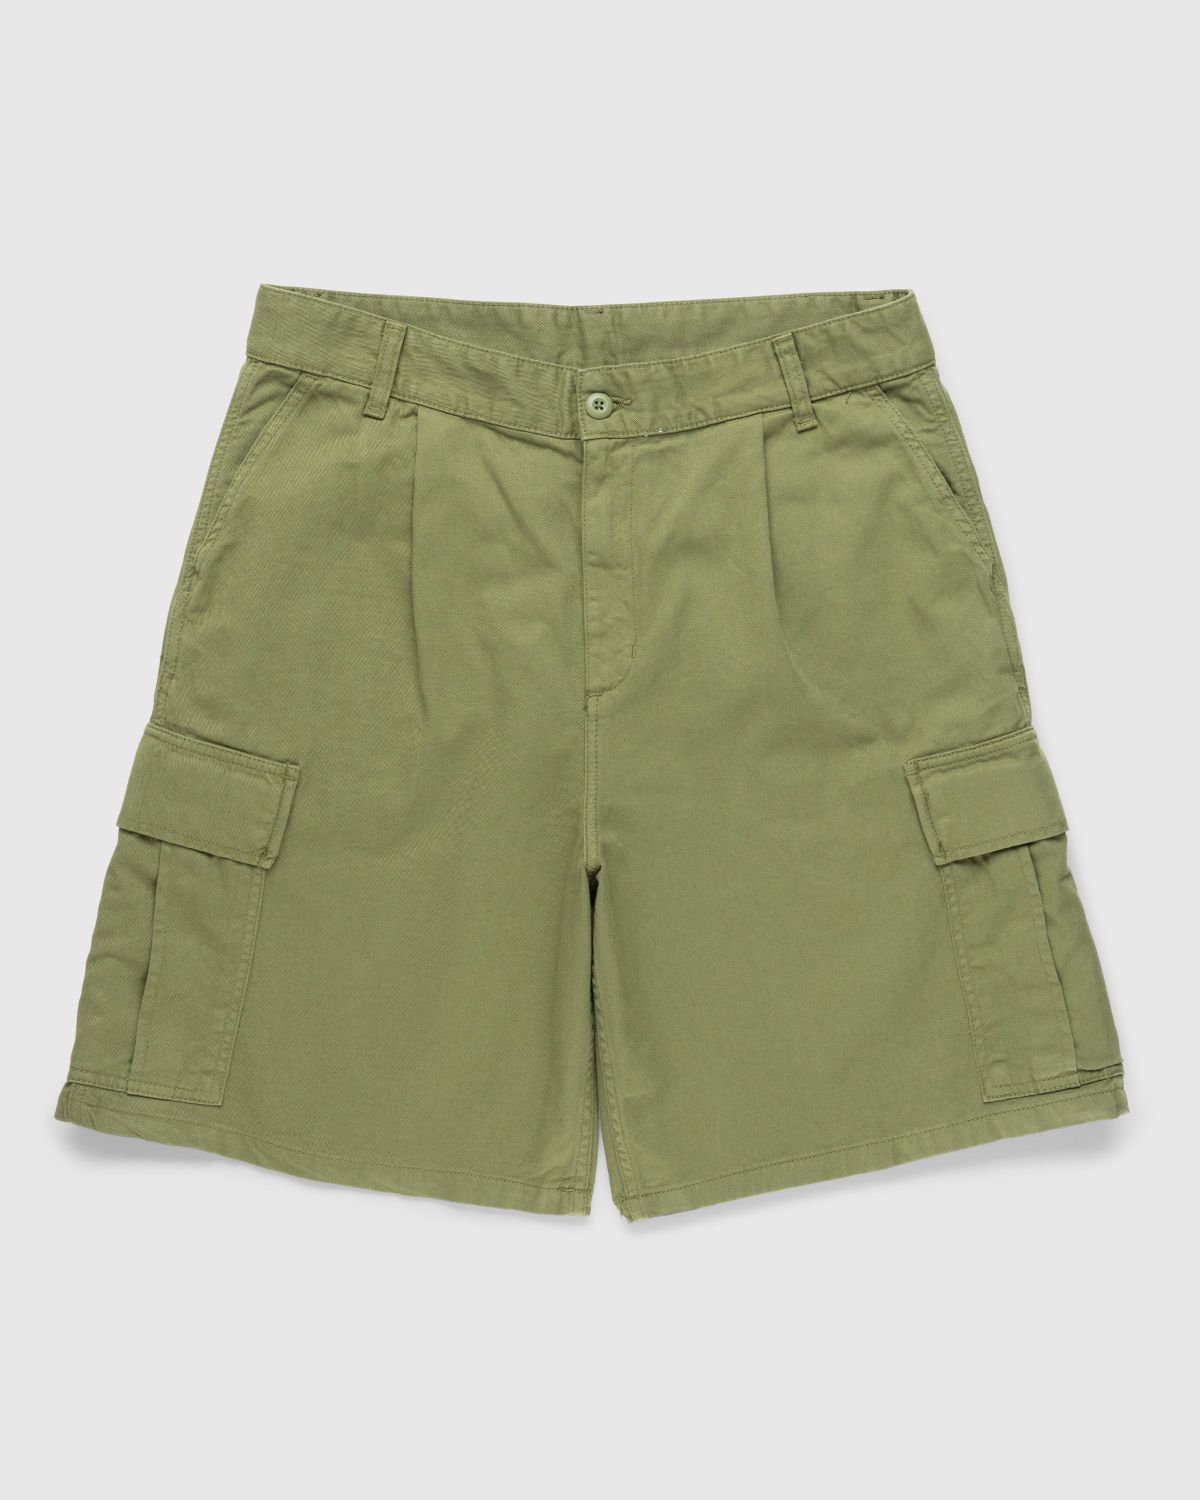 Carhartt WIP – Cole Cargo Short Green - Shorts - Green - Image 1